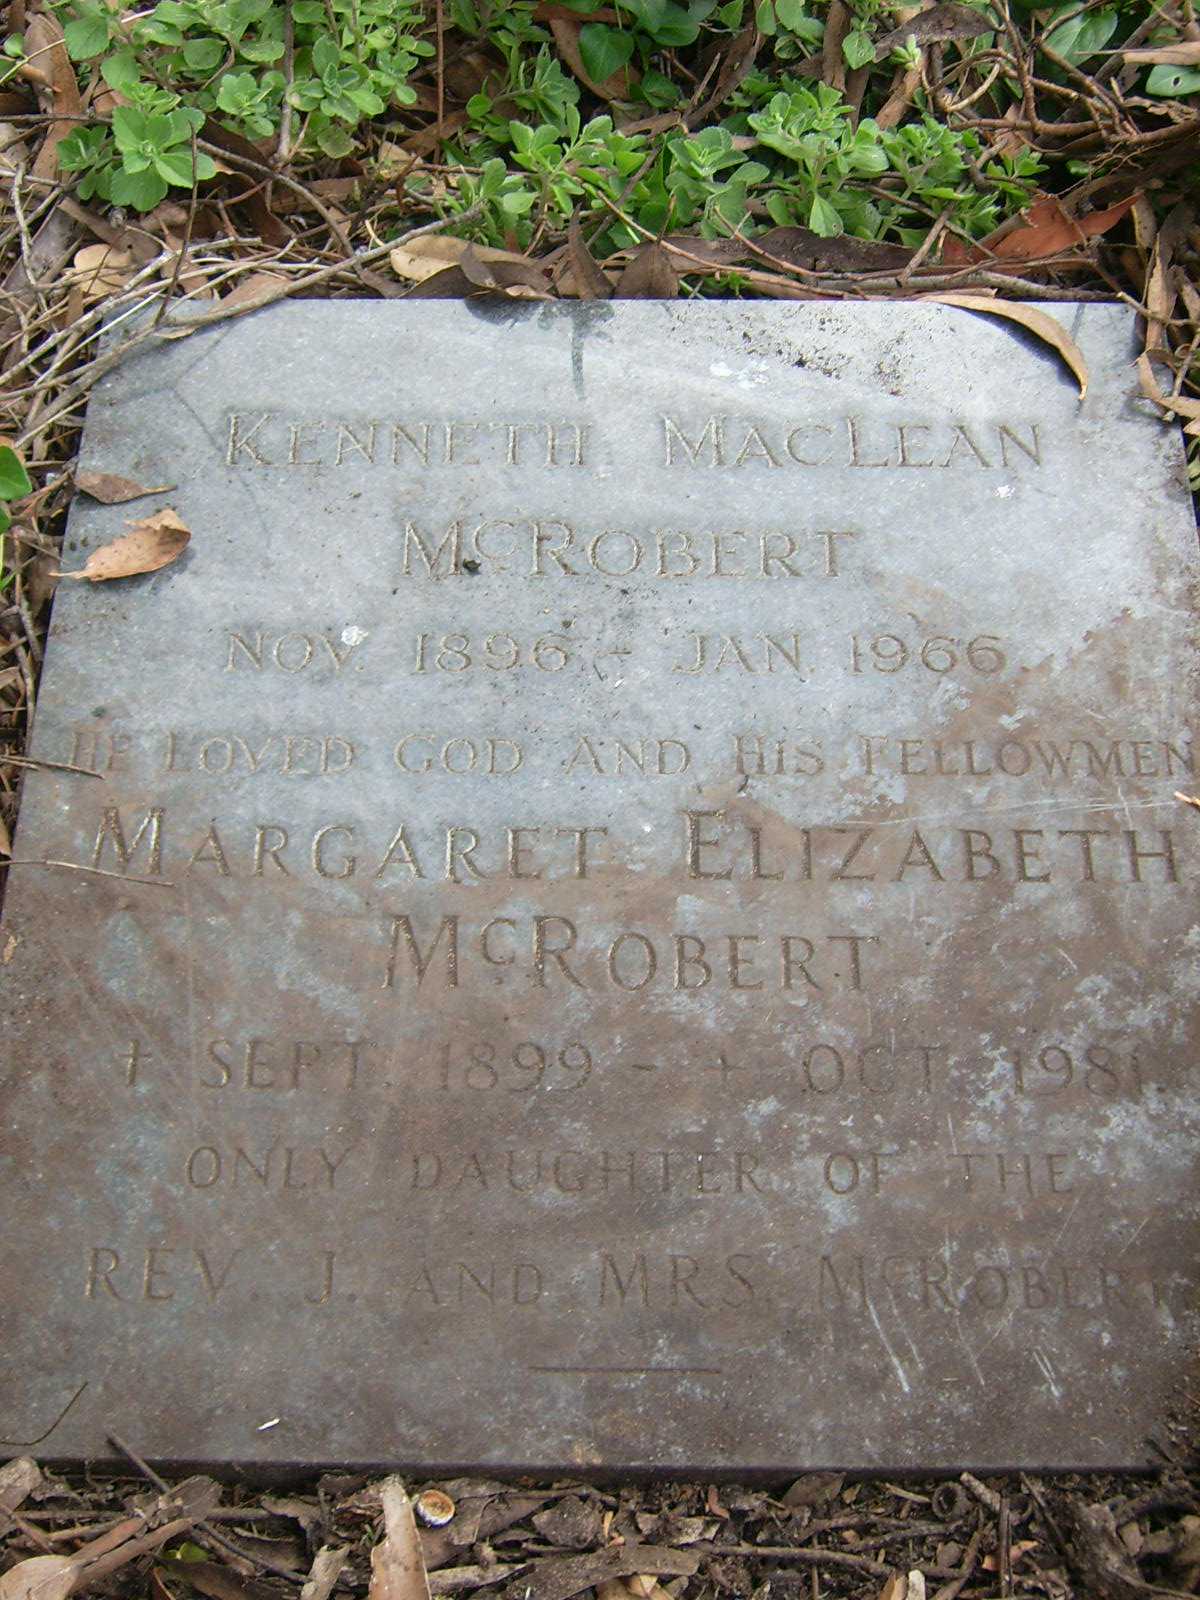 McROBERT Kenneth MacLean 1896-1966 :: McROBERT Margaret Elizabeth 1899-1981